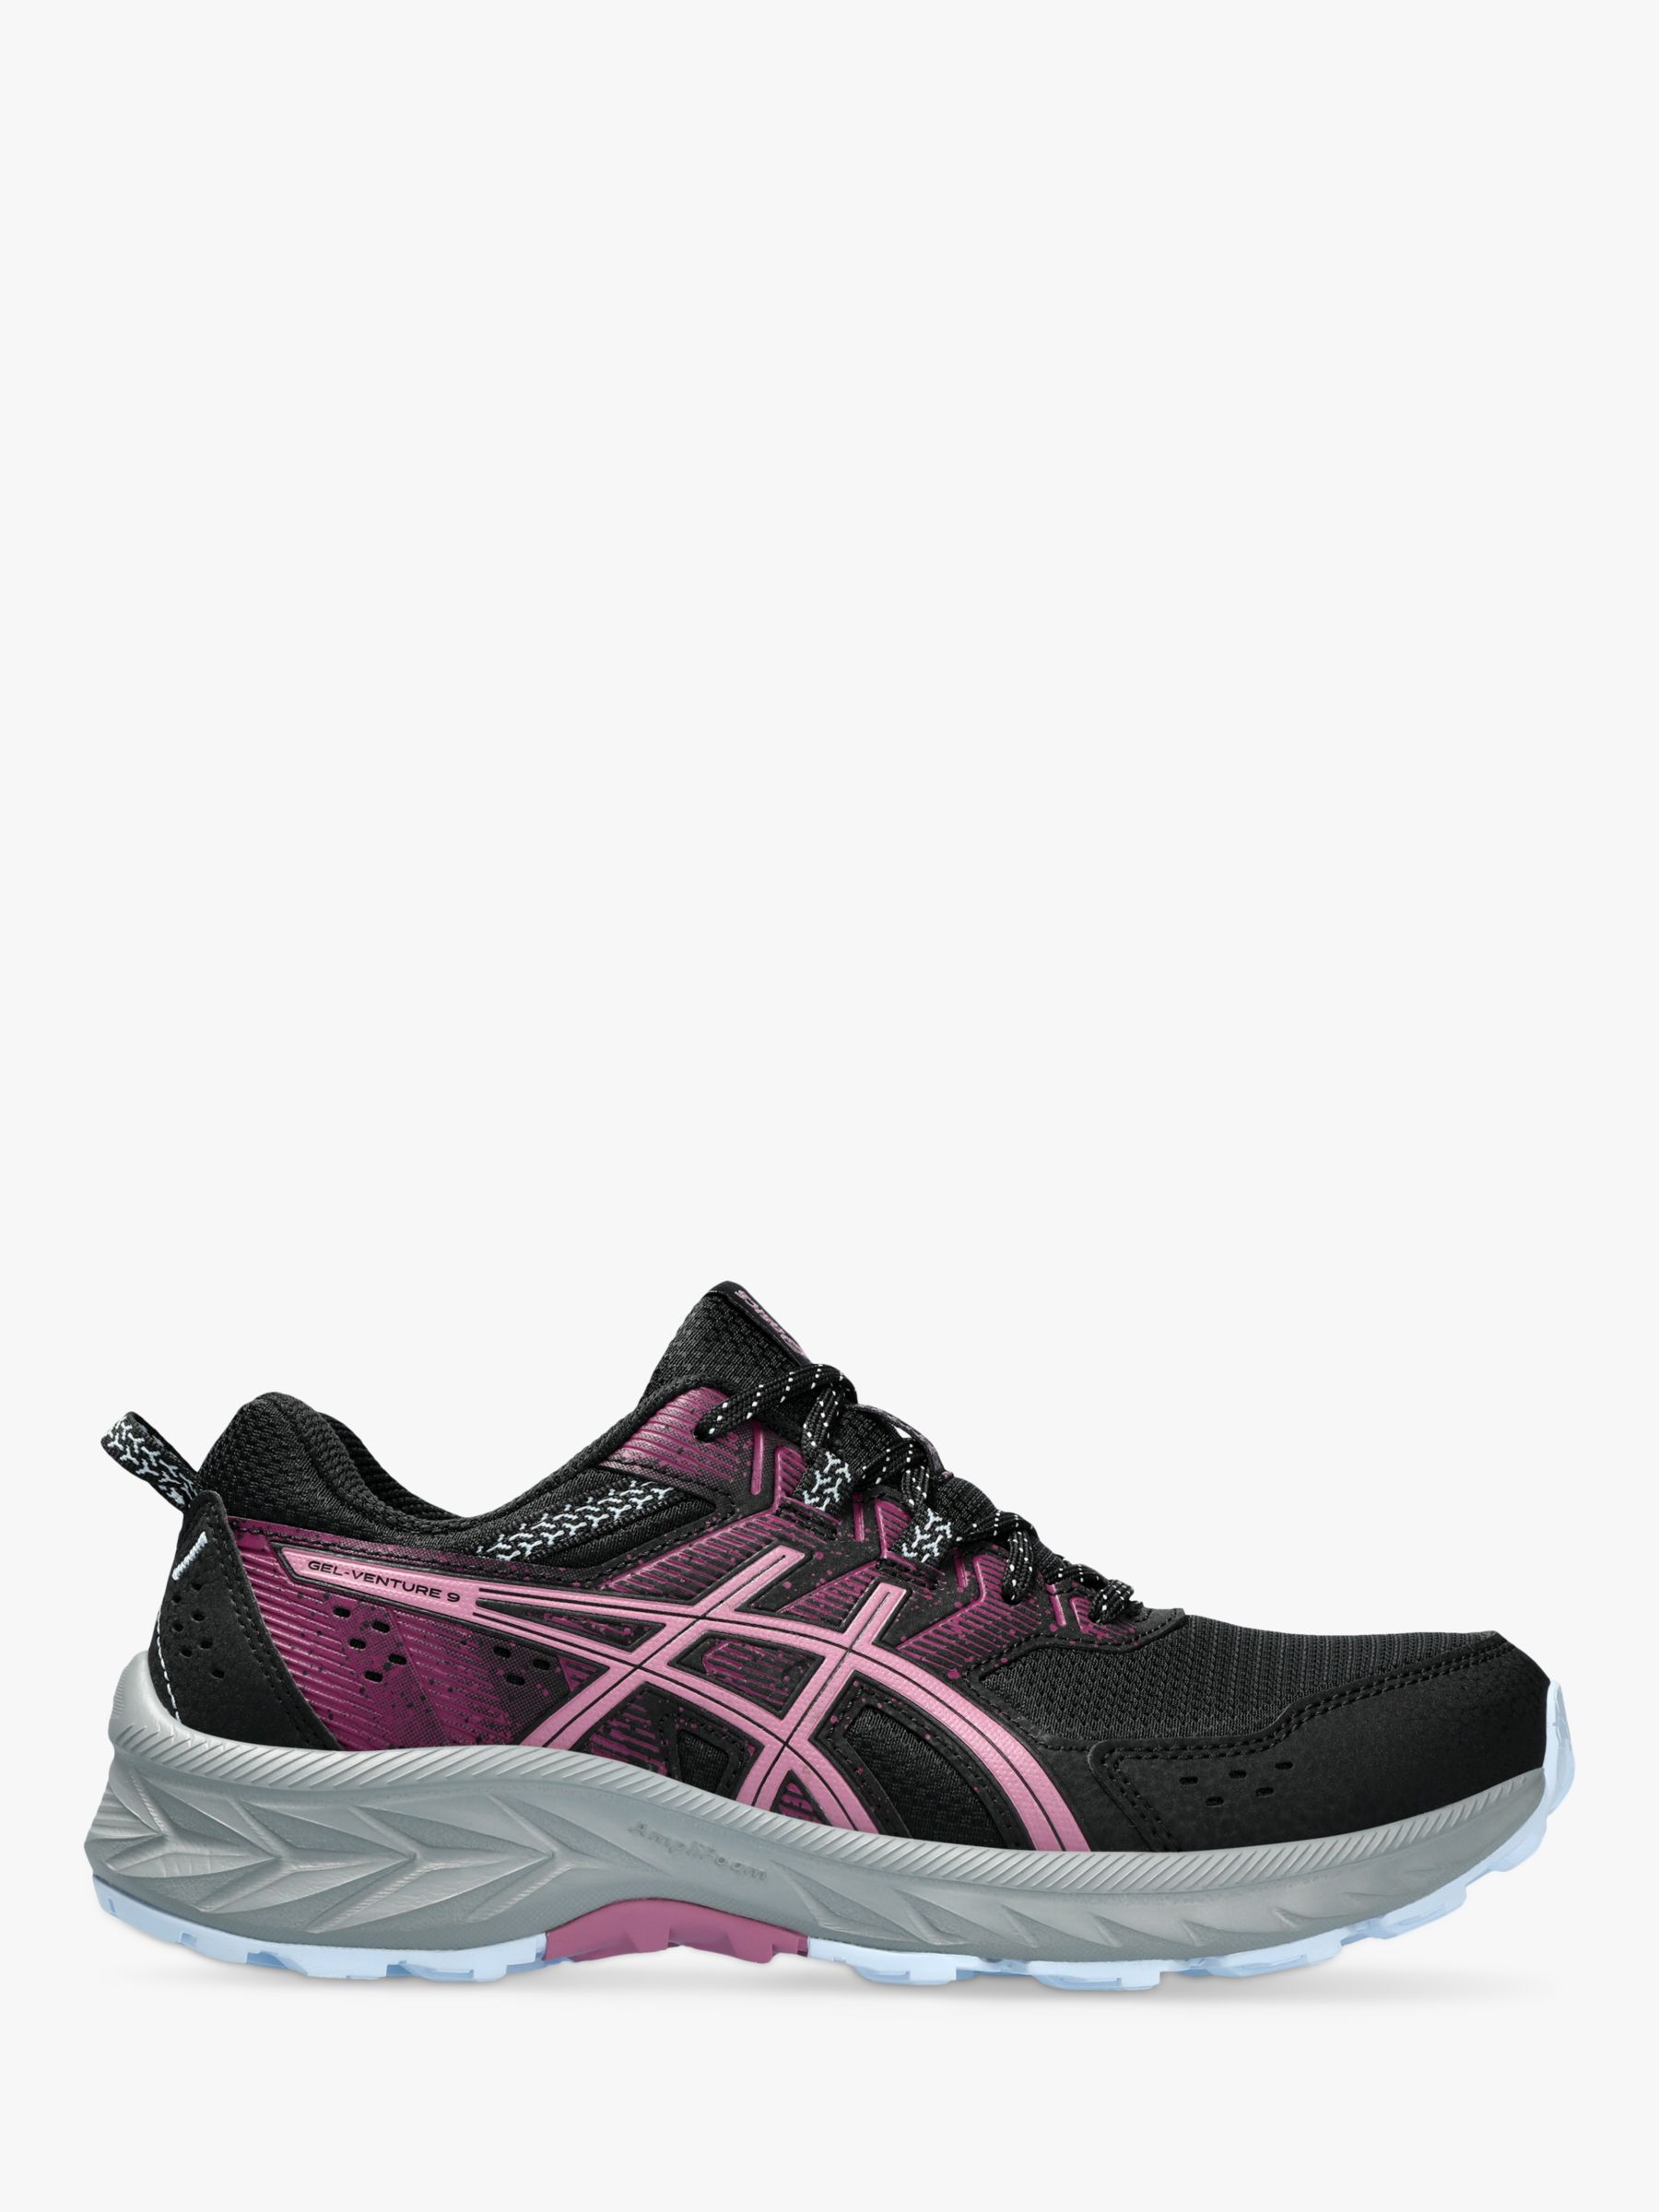 ASICS GEL-VENTURE 9 Women's Trail Running Shoes, Black/Berry, 5